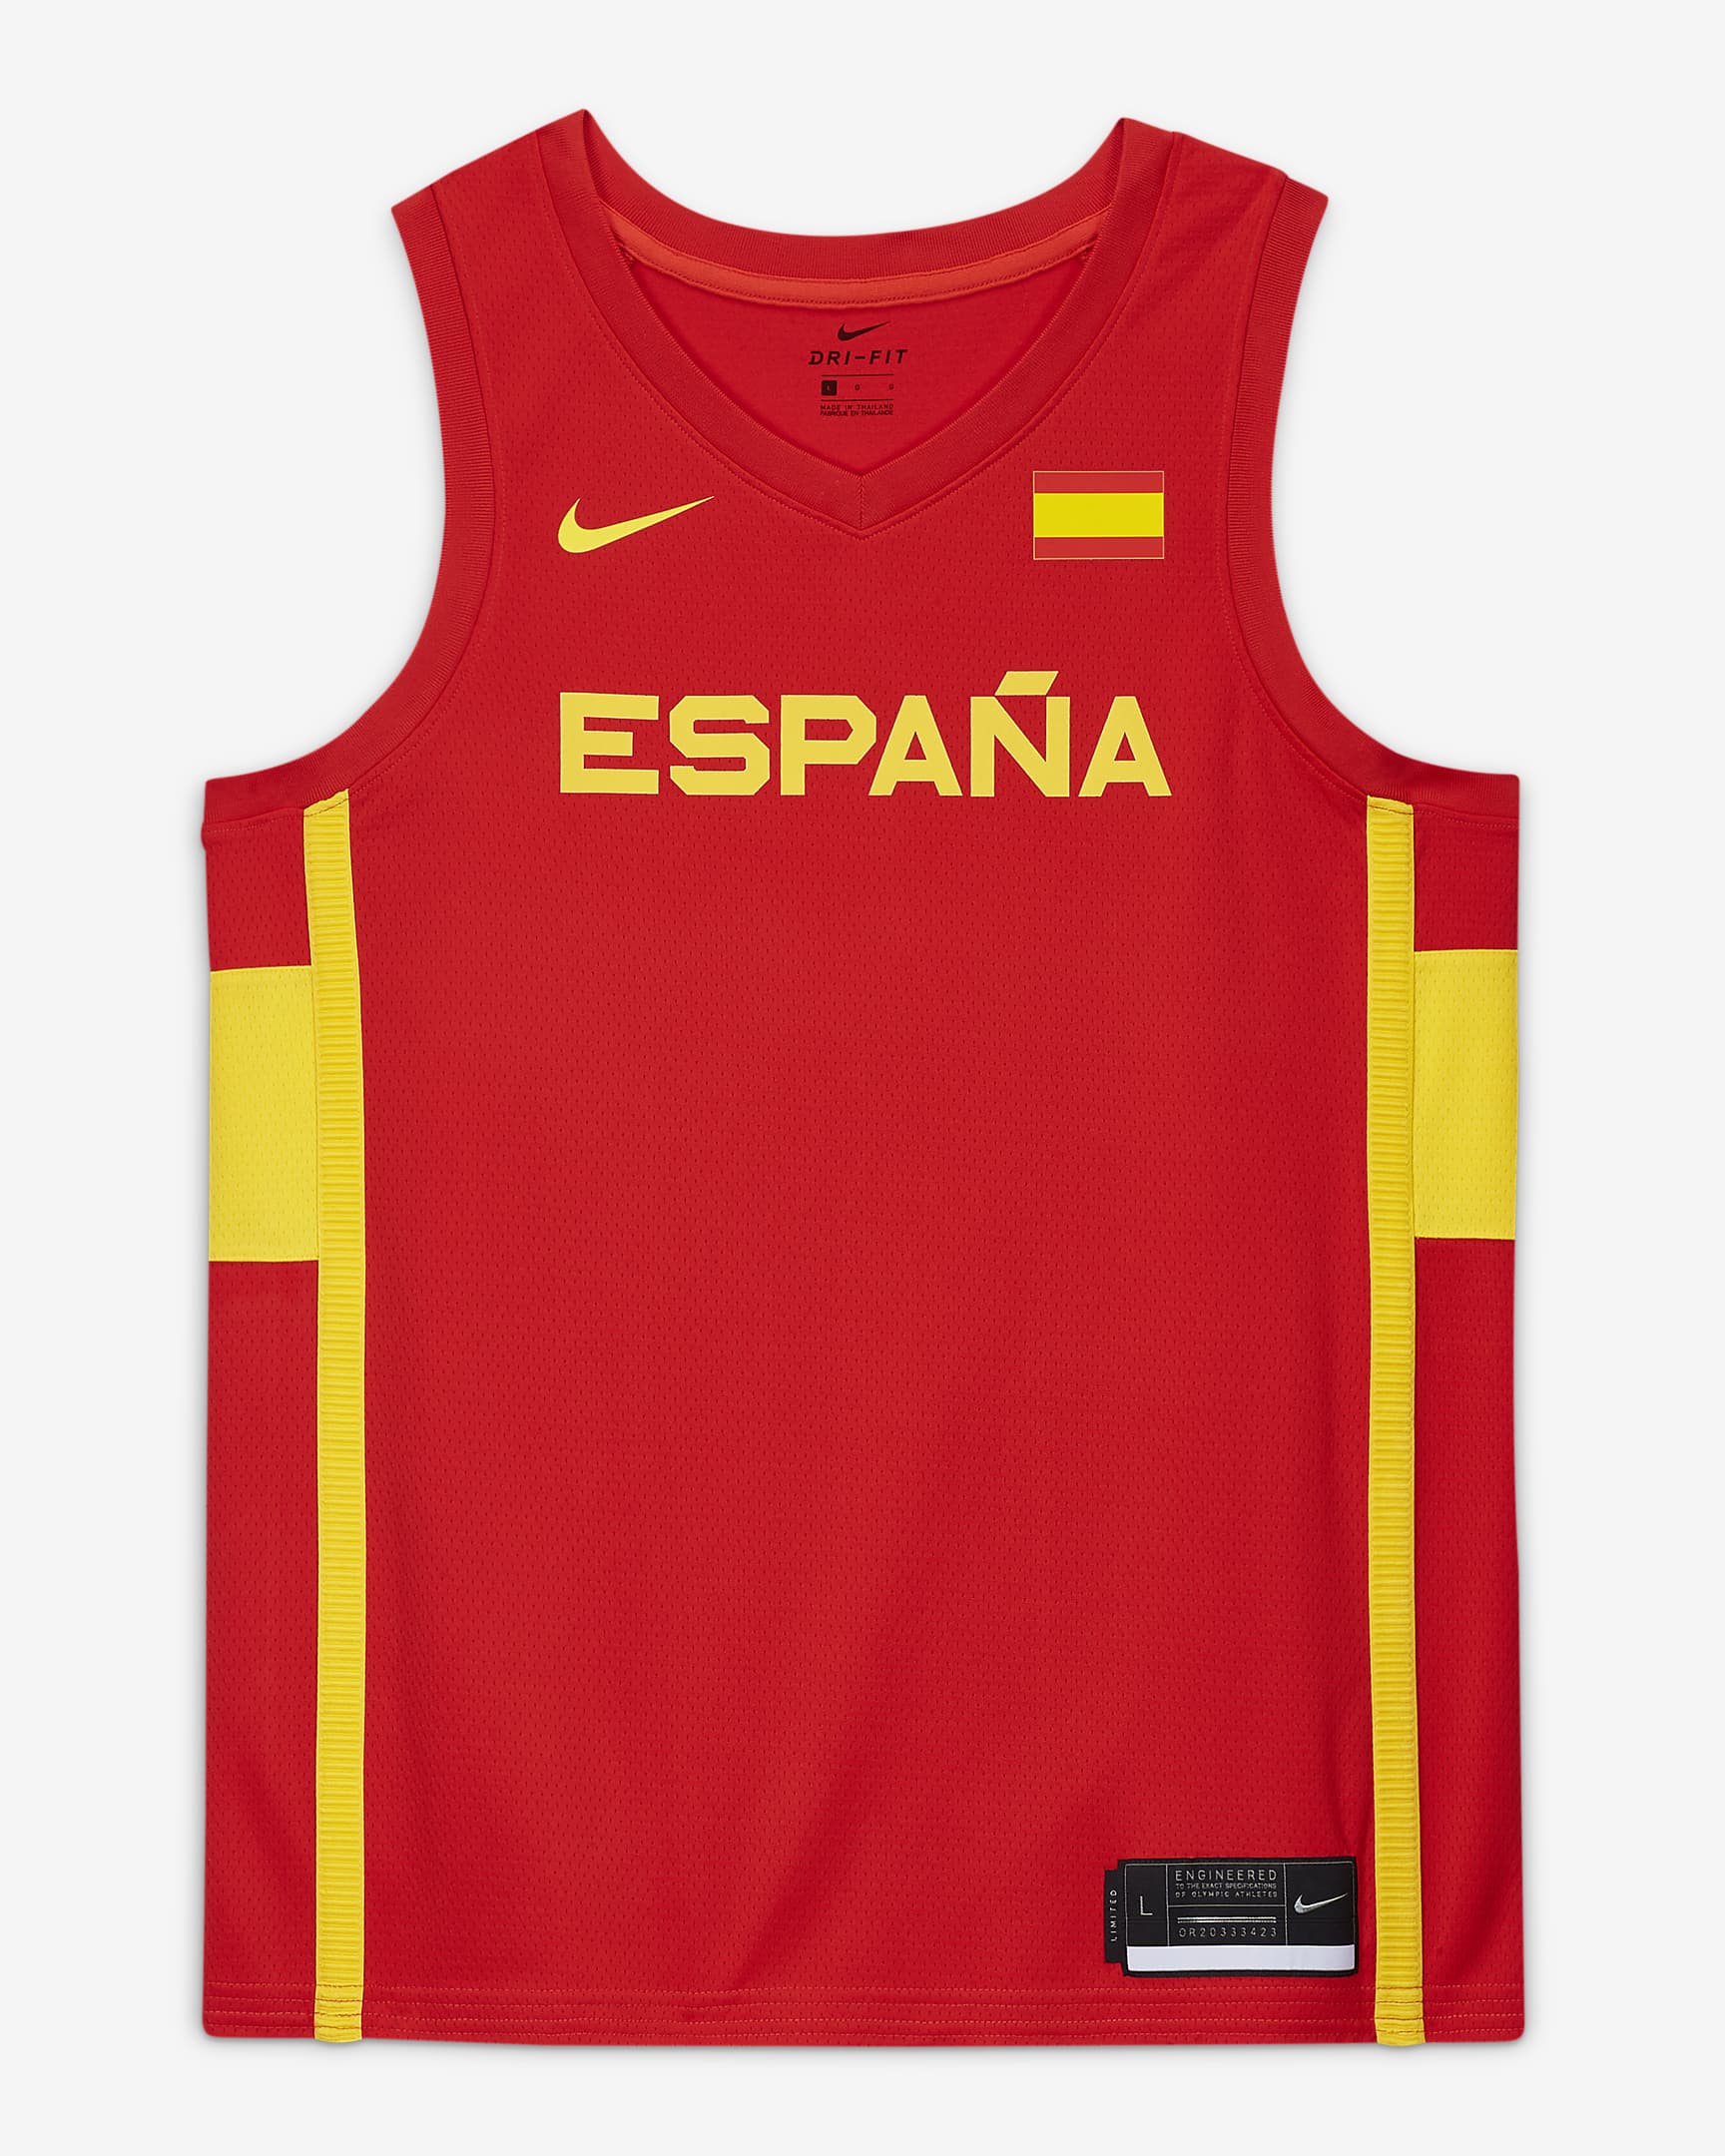 Spain Nike (Road) Limited Men's Nike Basketball Jersey. Nike CH